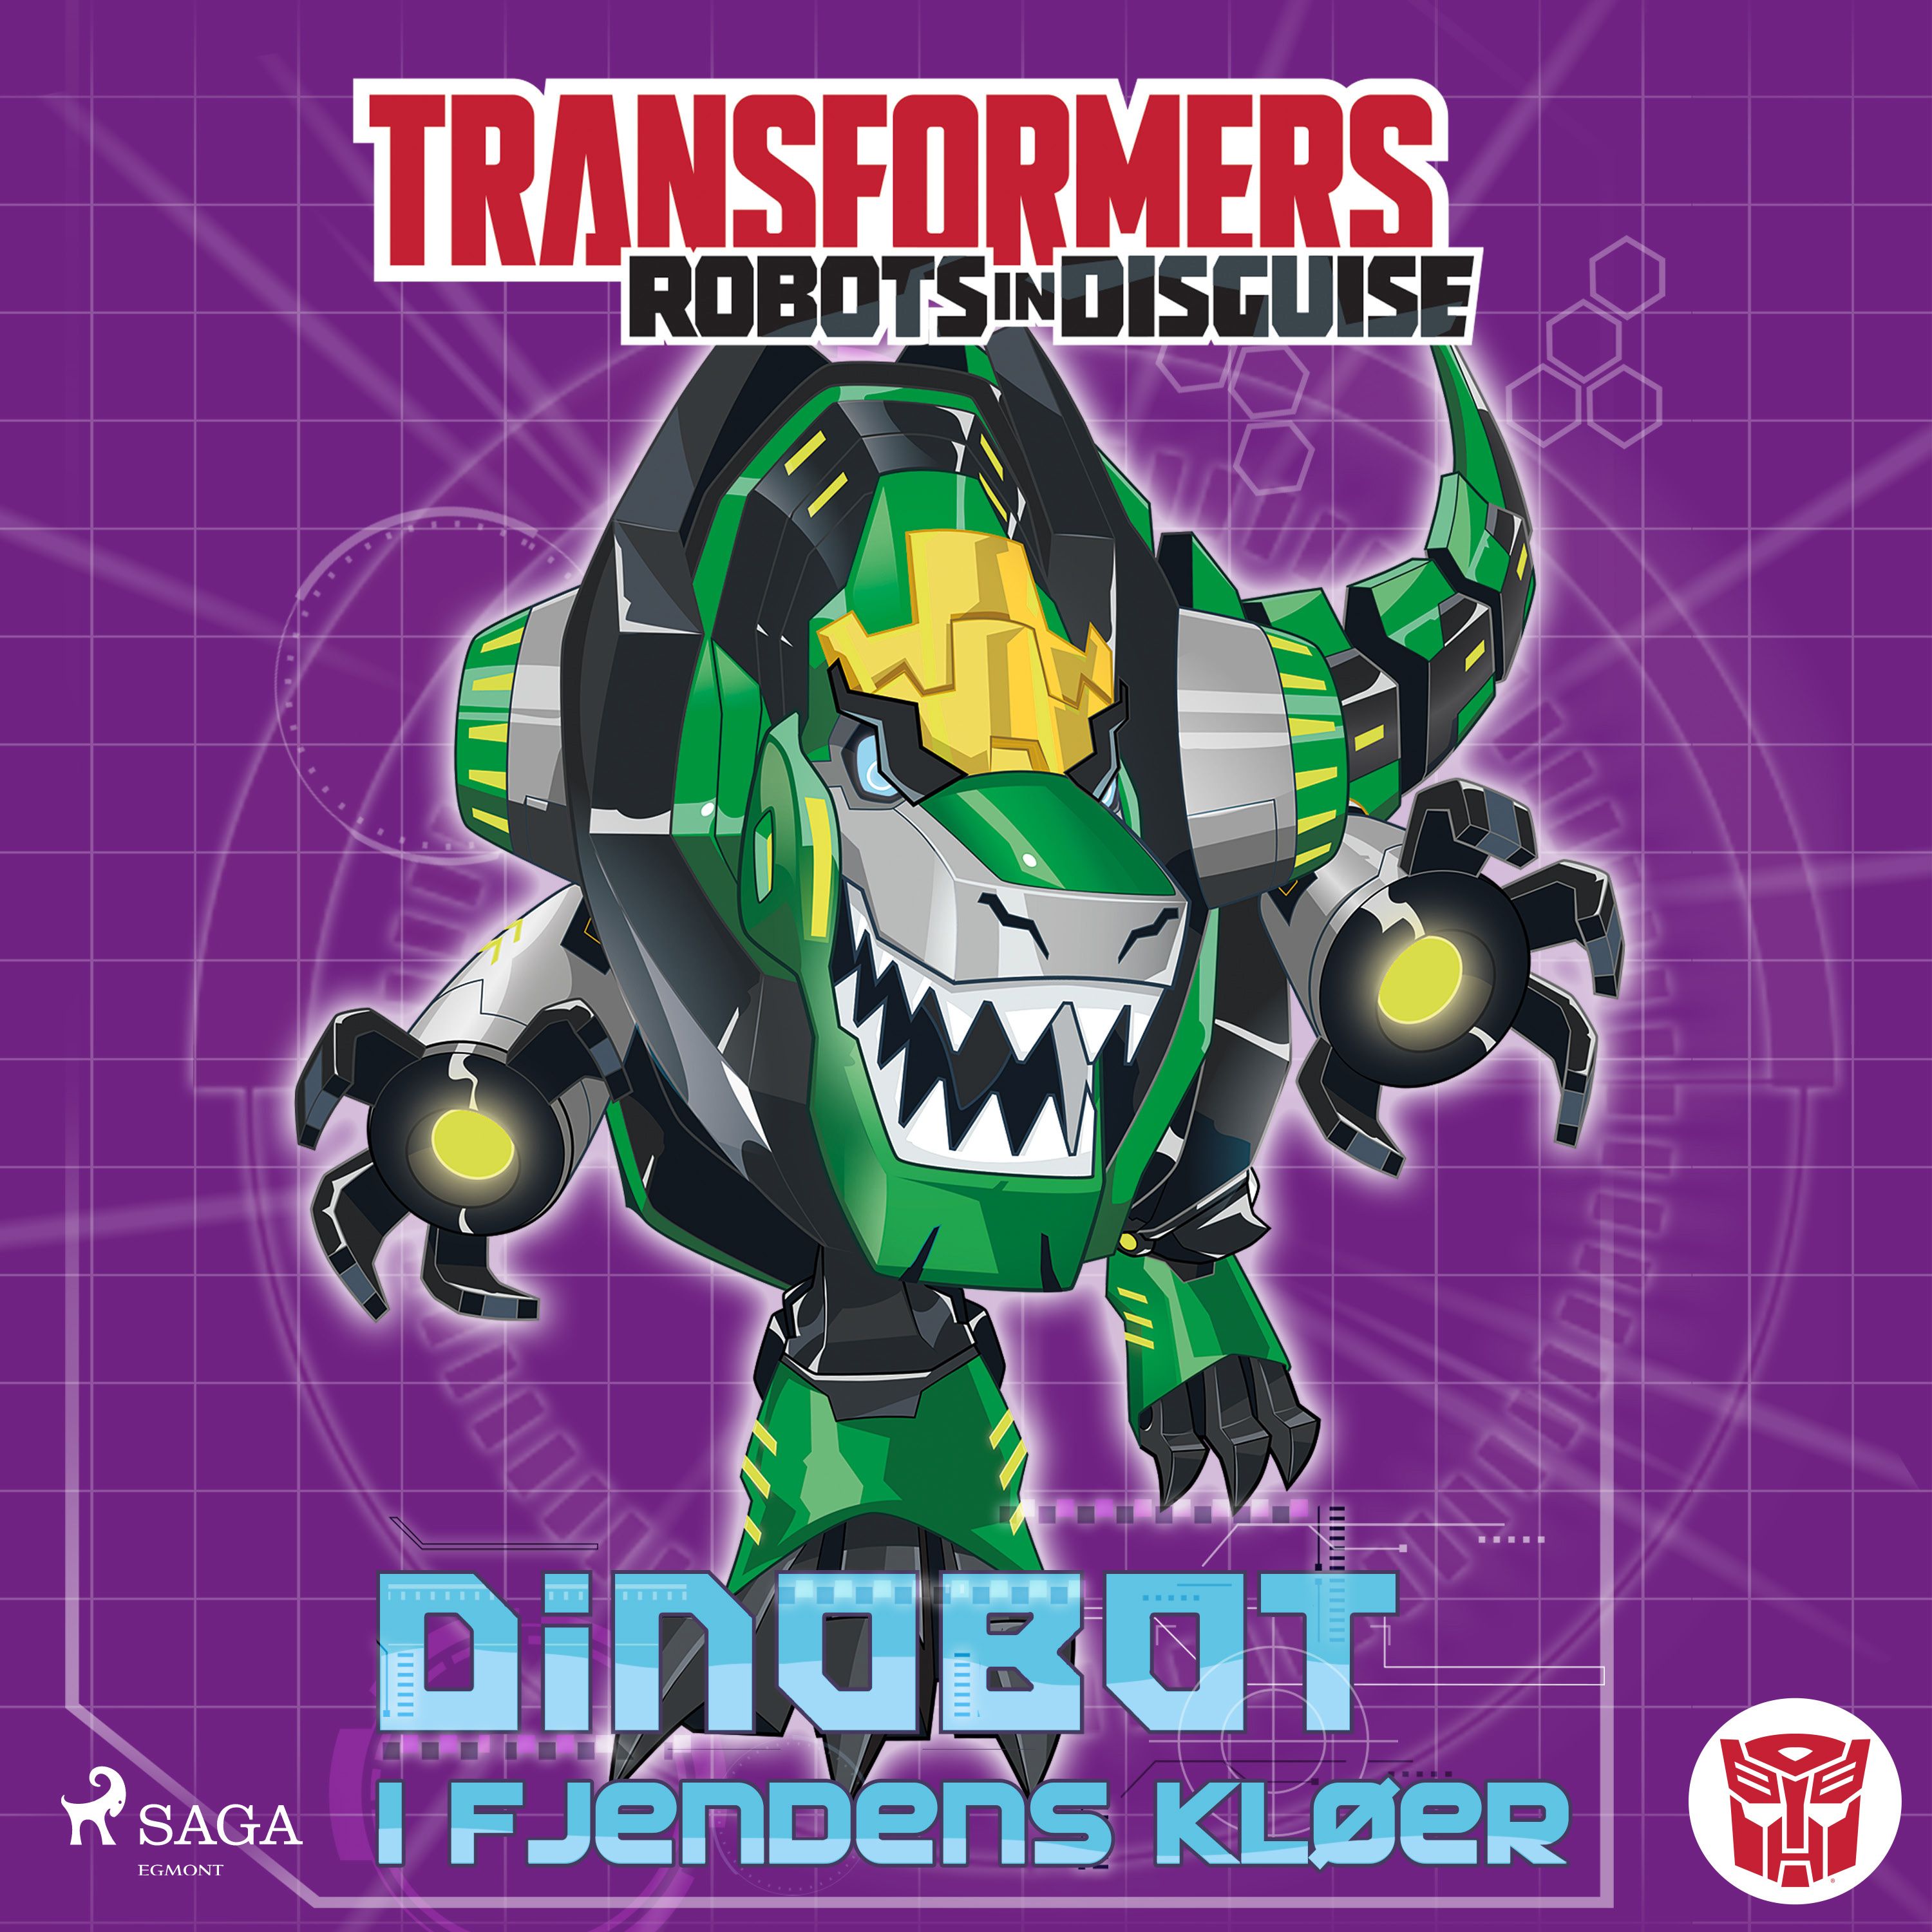 Transformers - Robots in Disguise - Dinobot i fjendens kløer, ljudbok av John Sazaklis